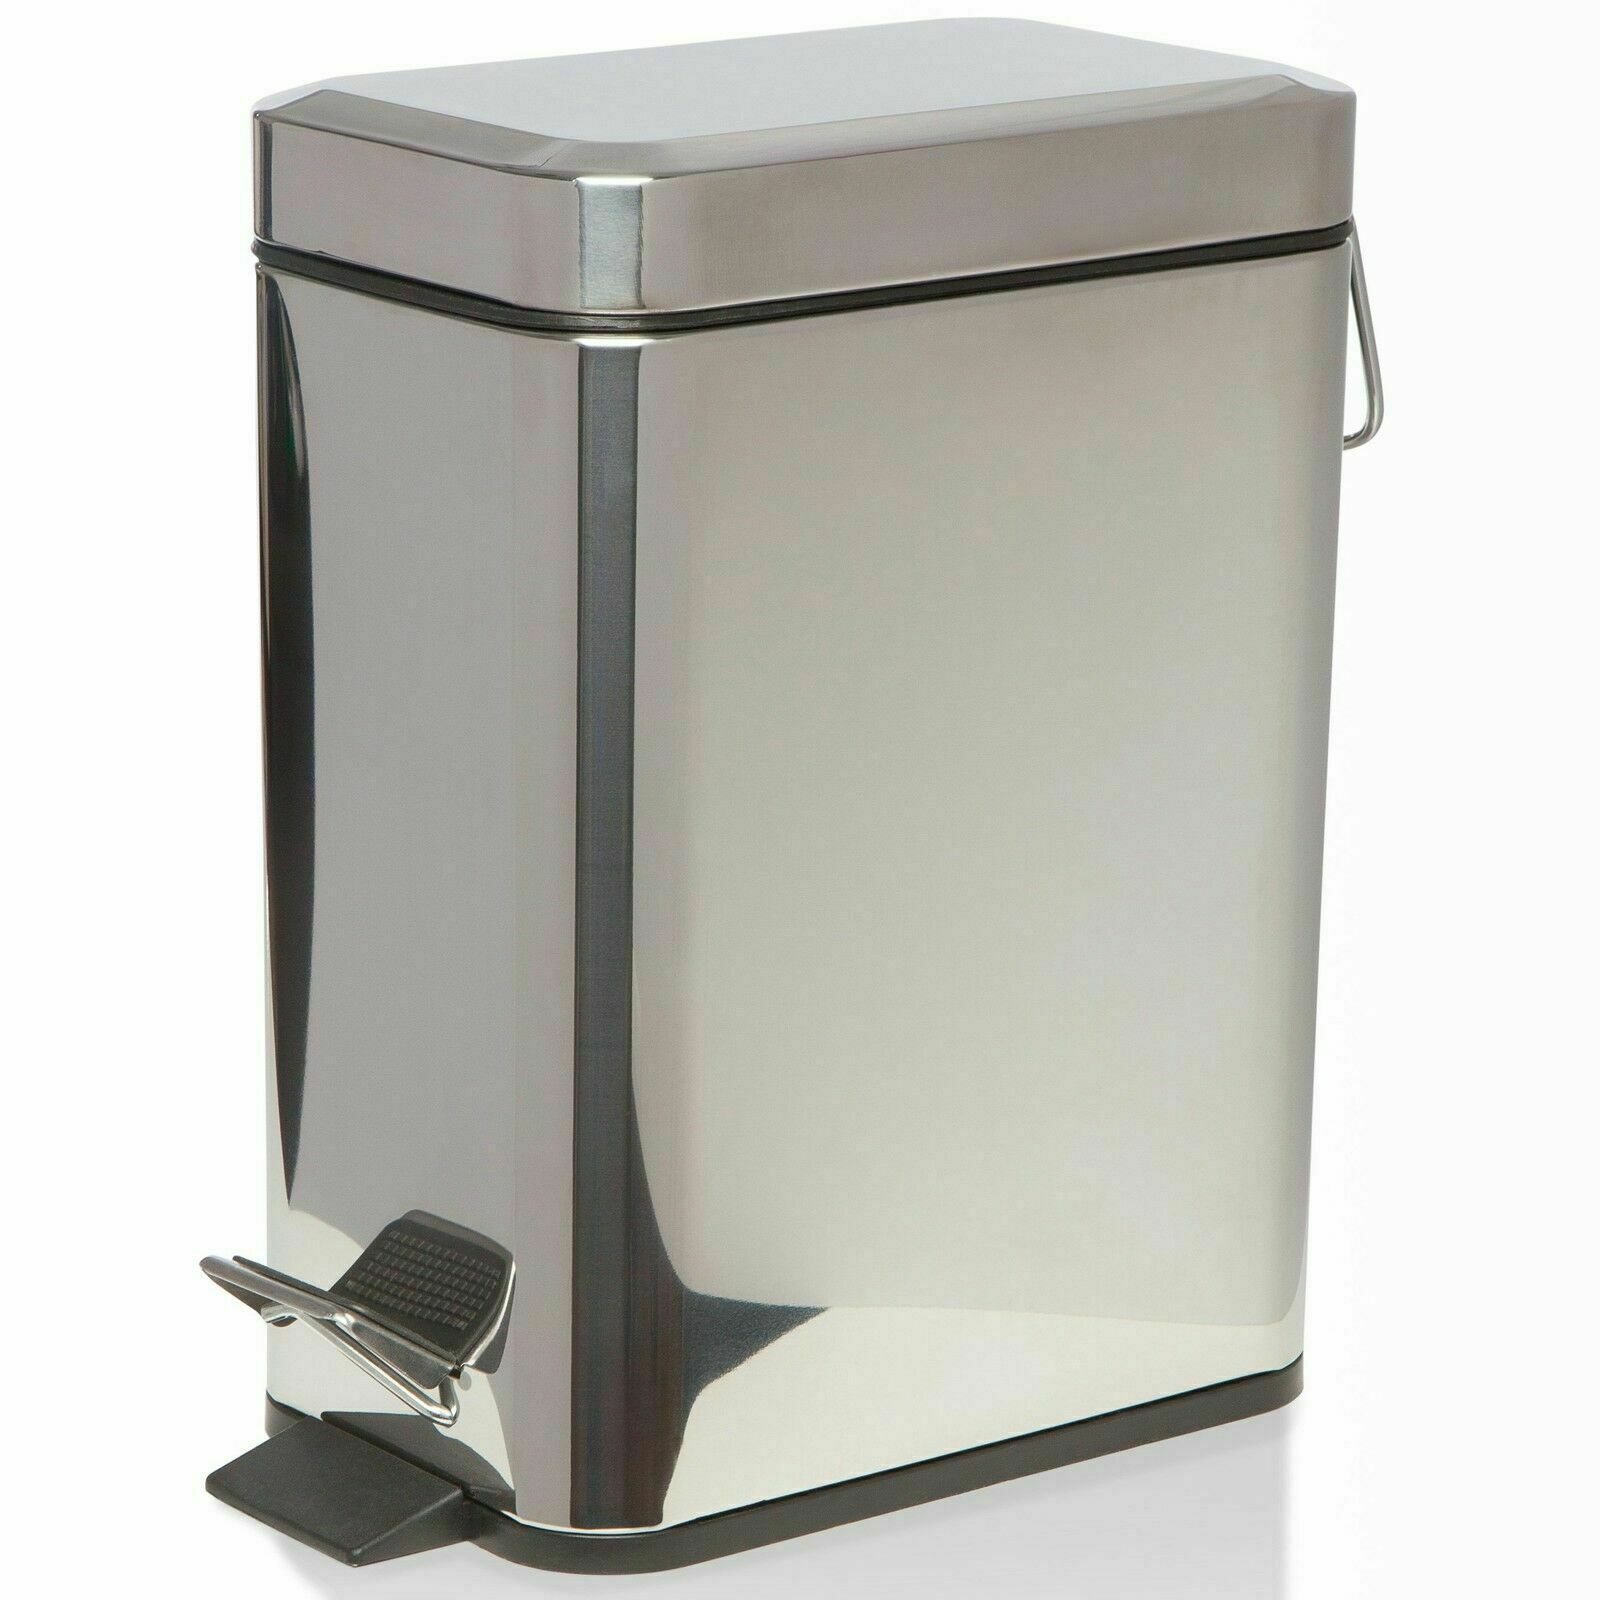 5L Silver Satin Matt Stainless Steel Soft Close Pedal Bin Bathroom Kitchen Office Cube